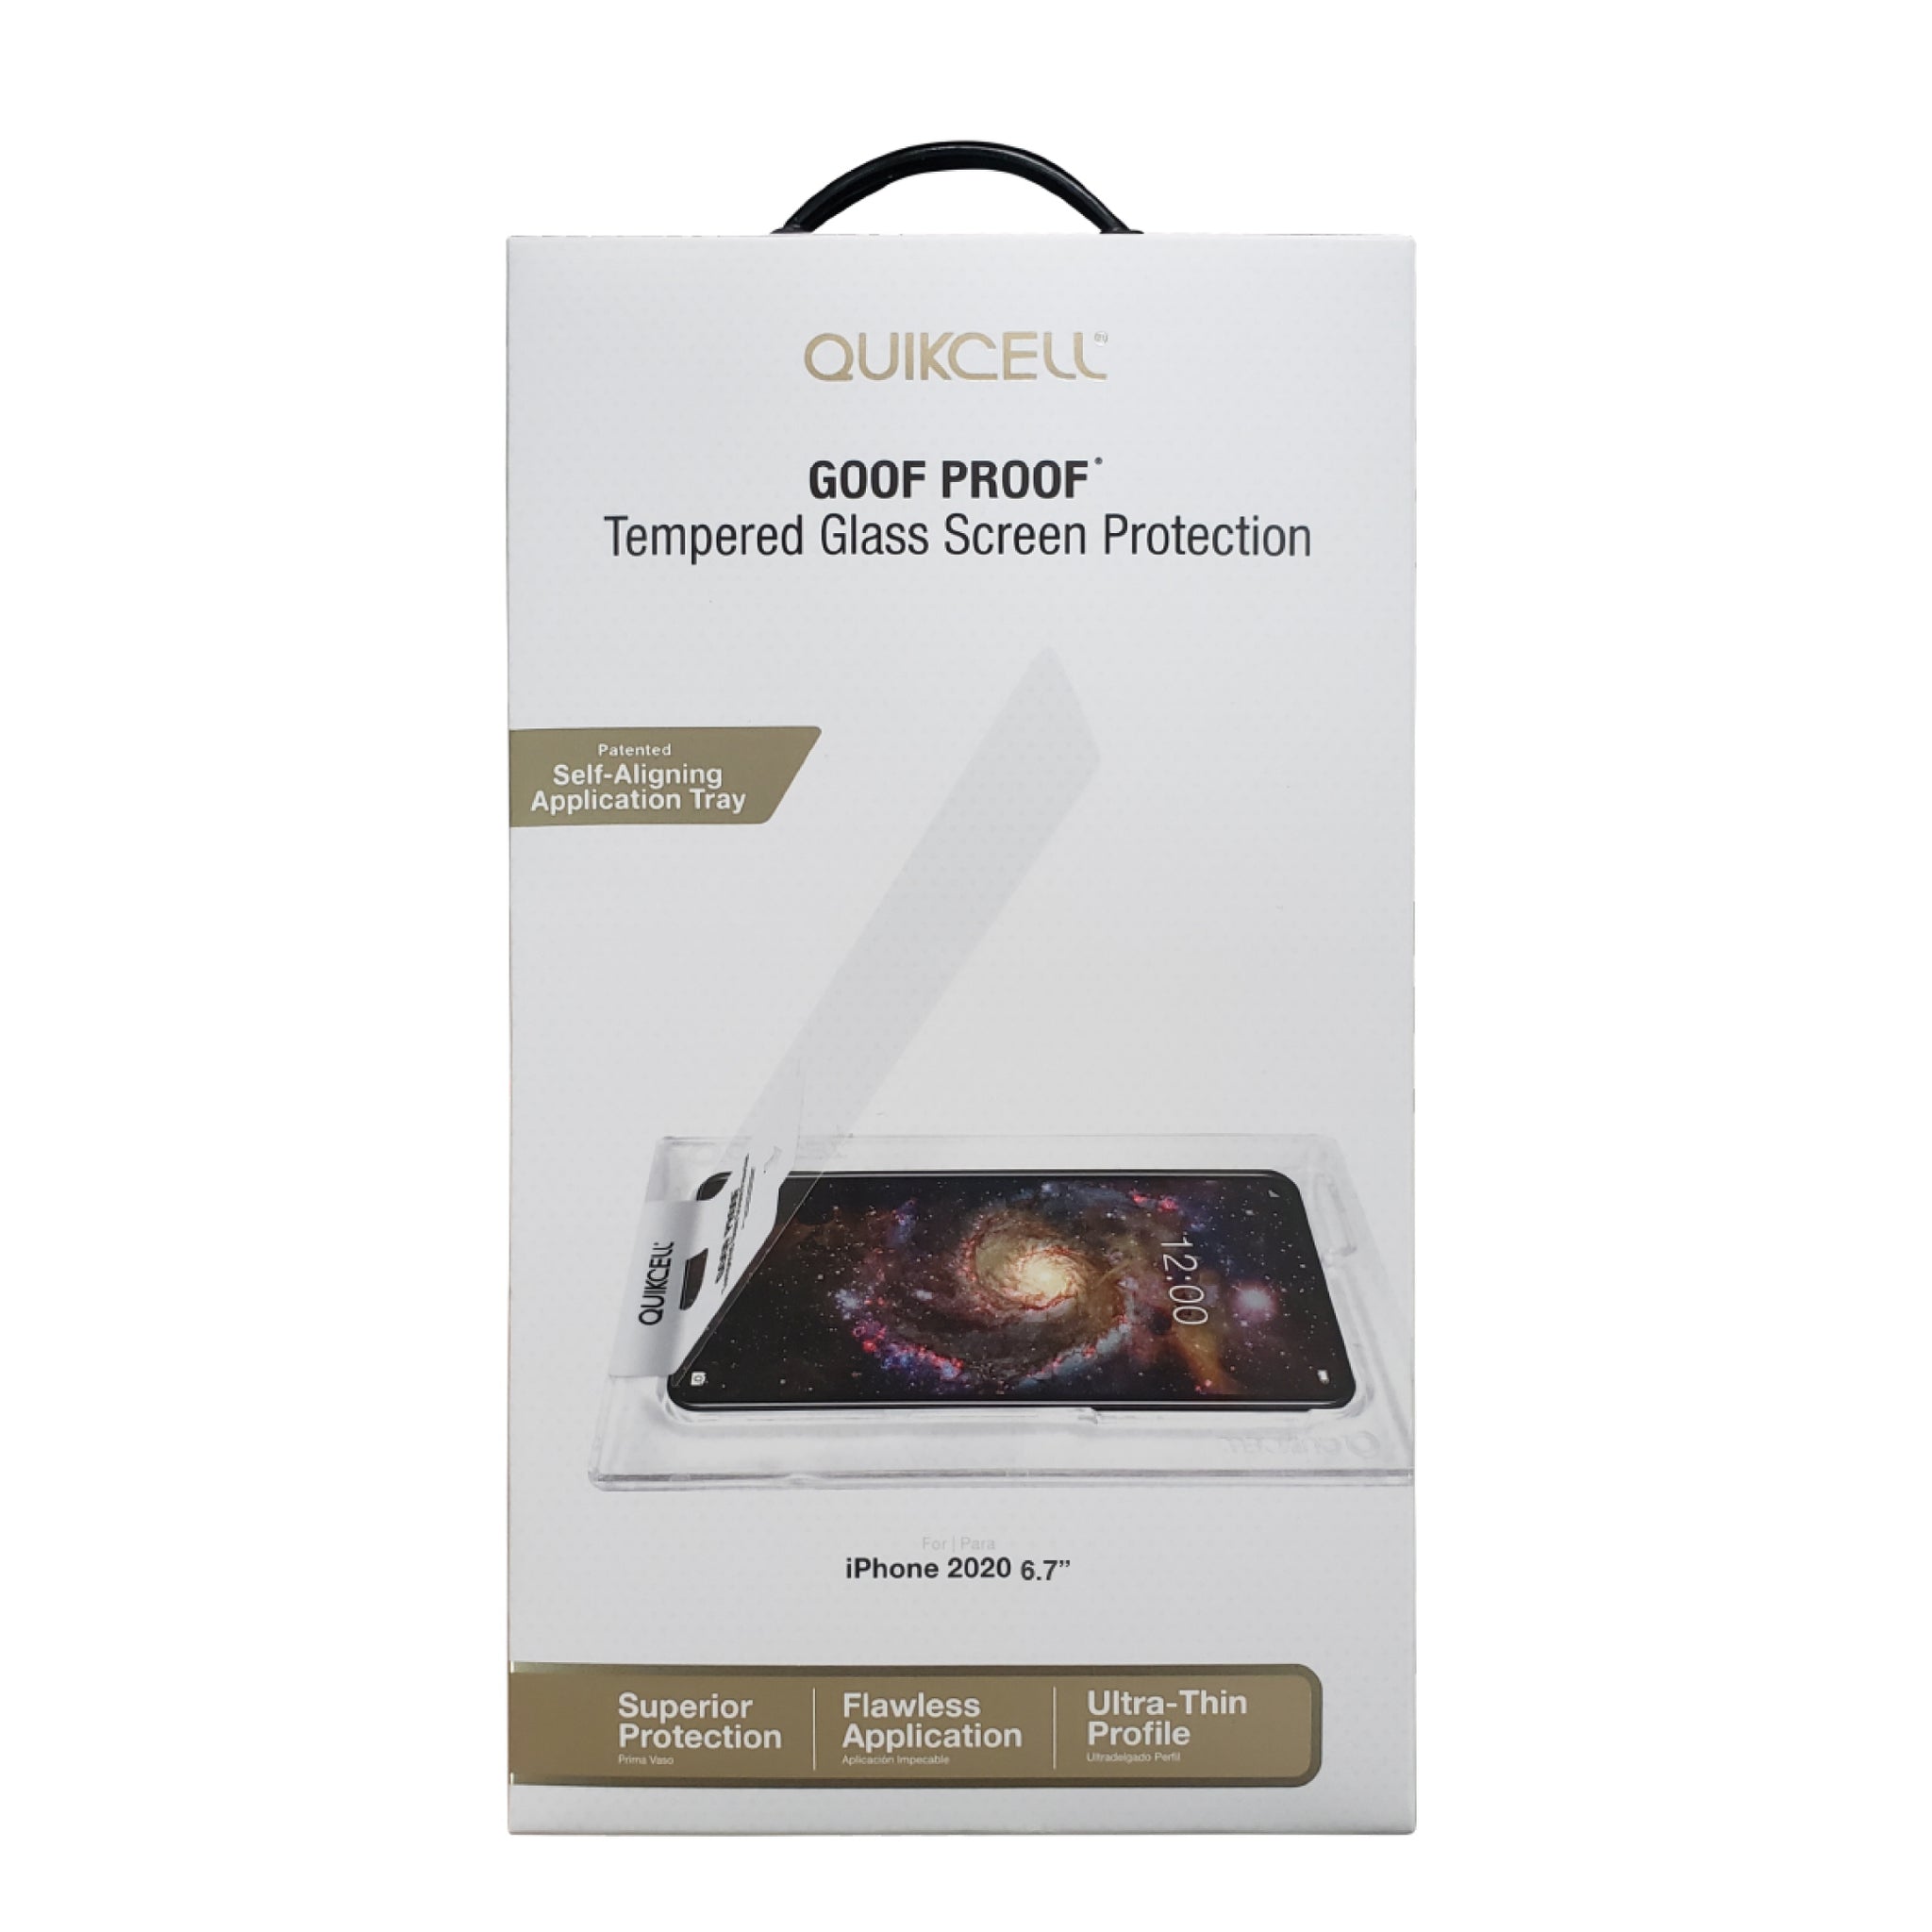 Comprar Protector de cristal templado iPhone 12 / iPhone 12 Pro